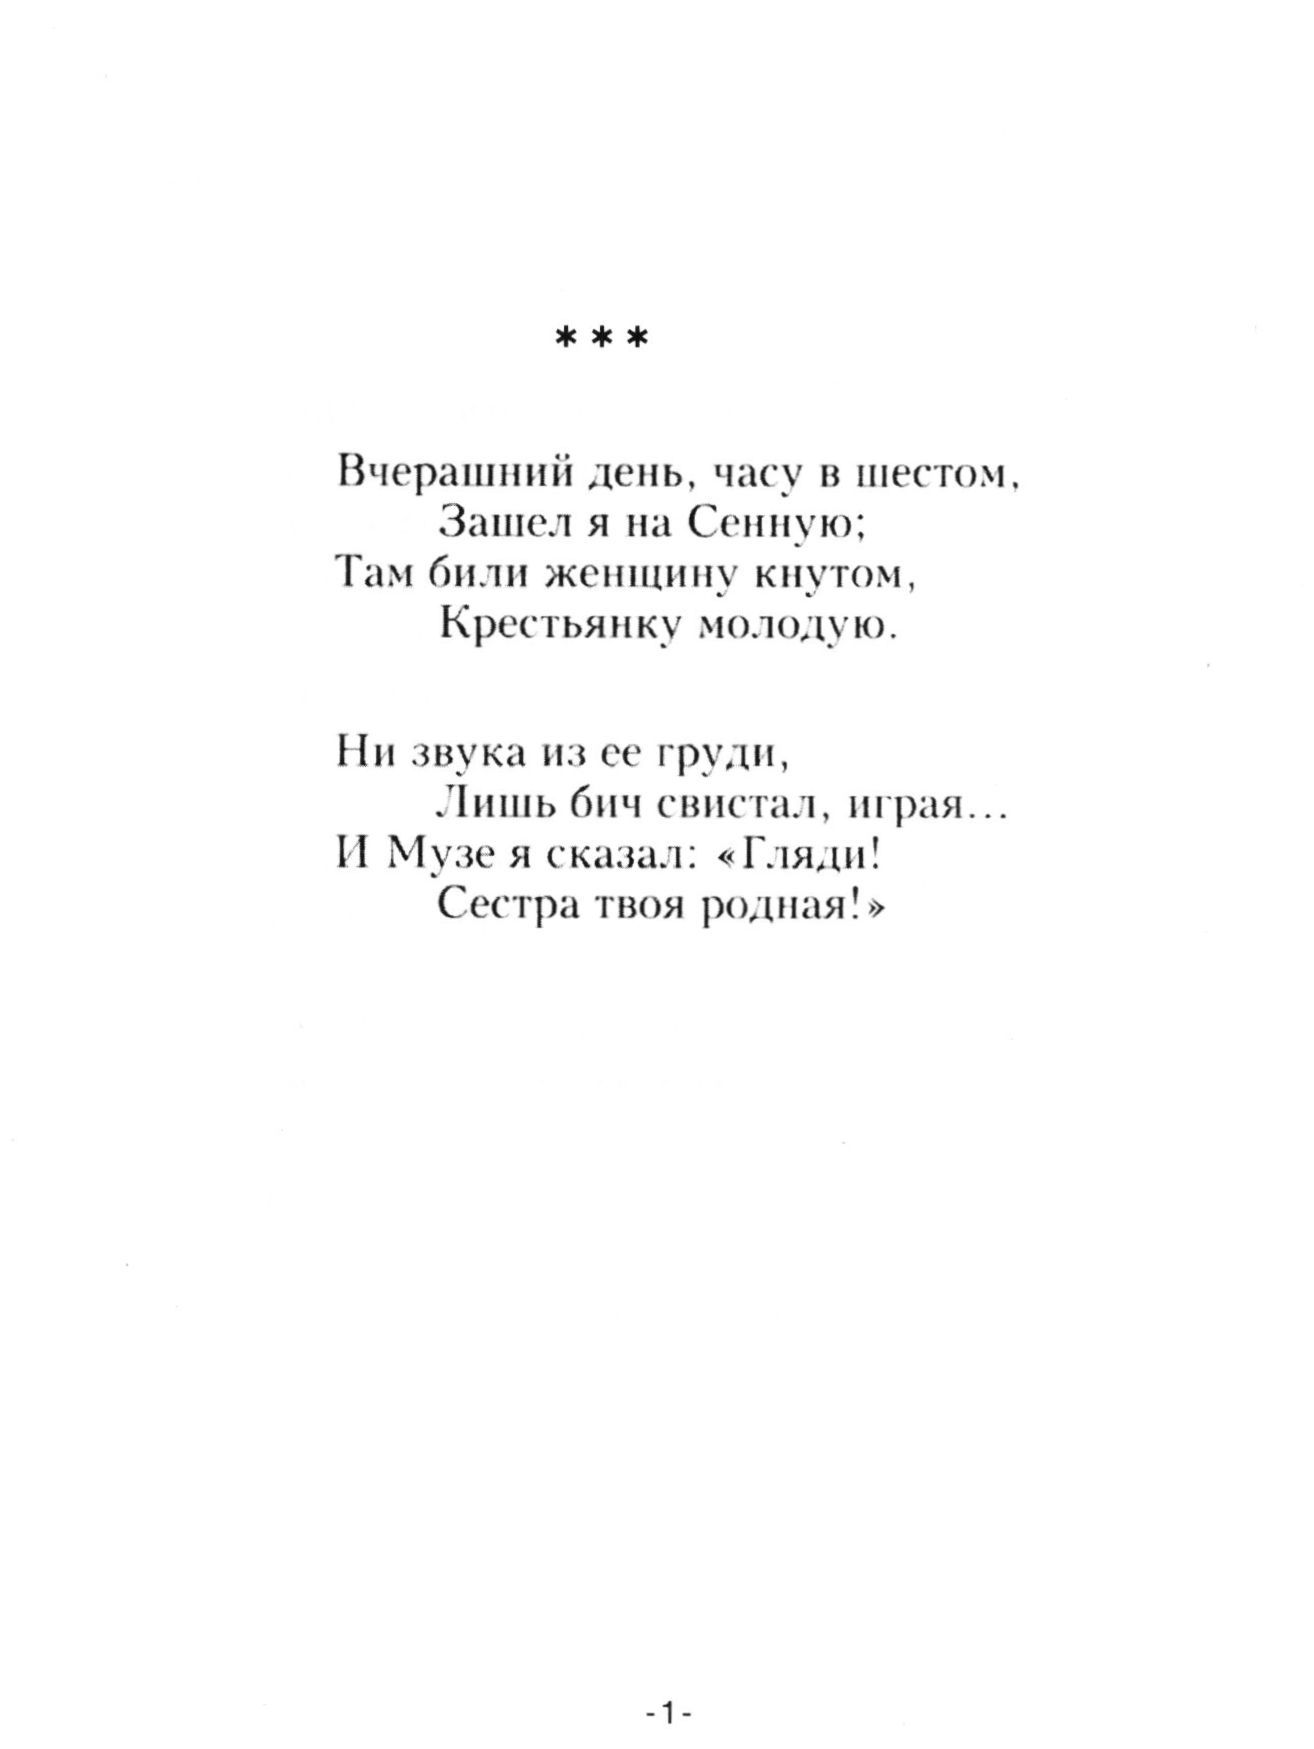 Стихотворение Николая Александровича Некрасова